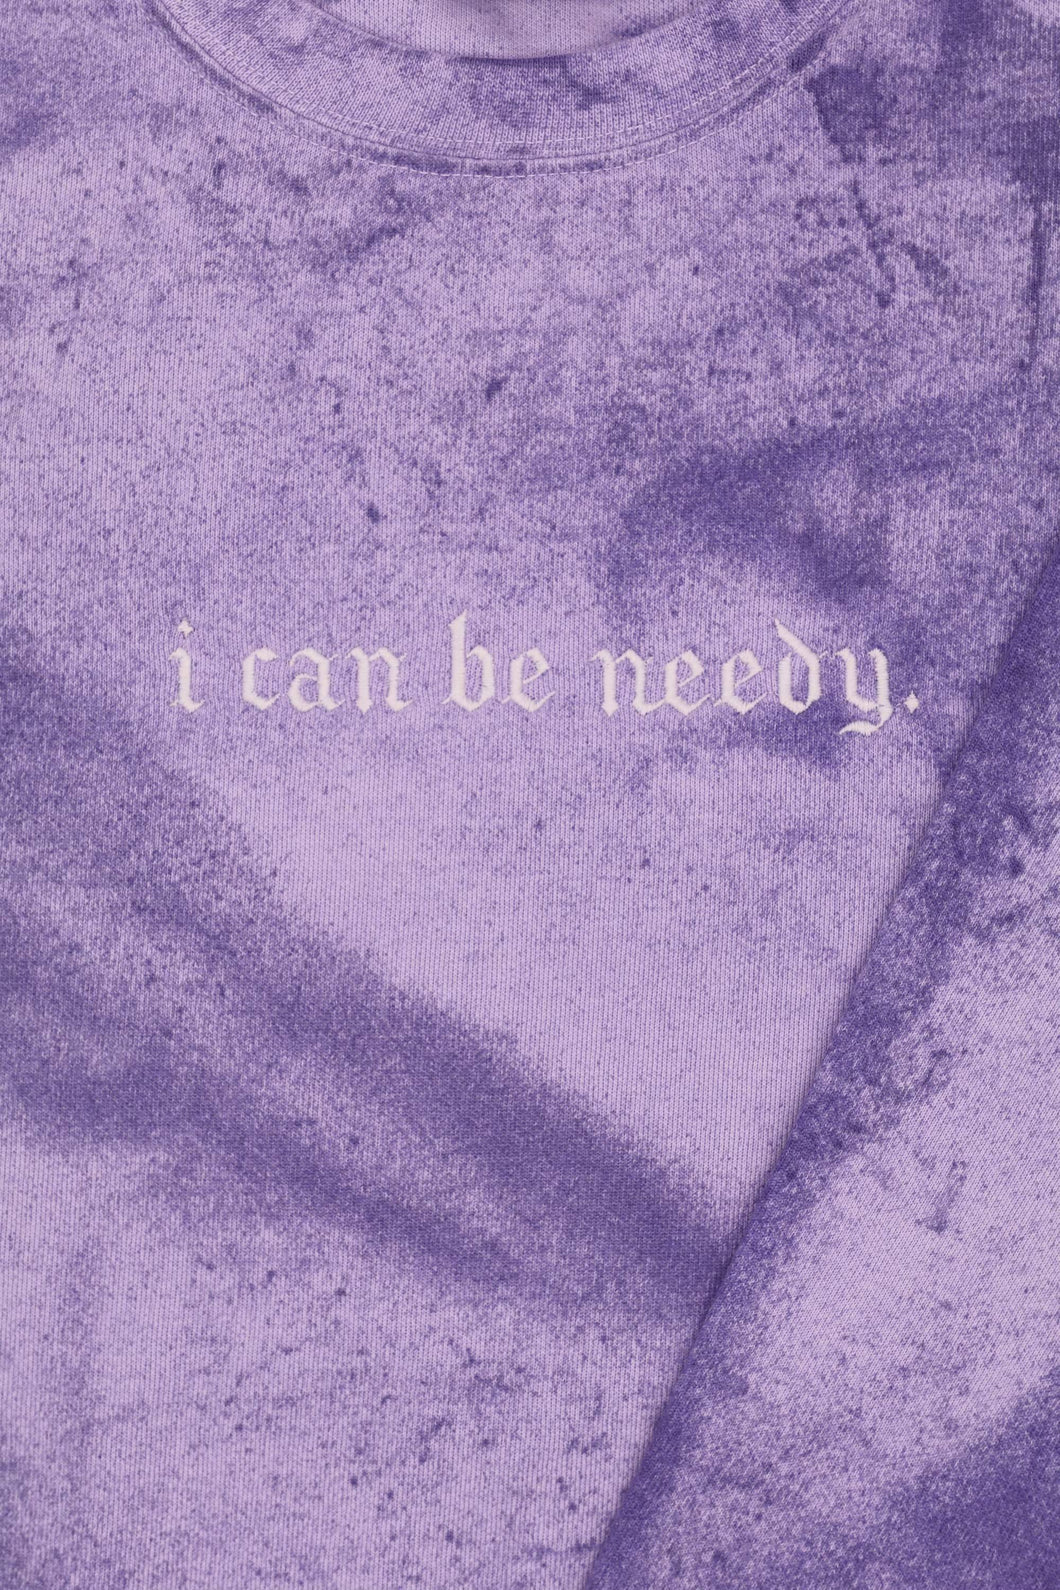 Ariana Grande - thank u, next - Purple Acid Wash Needy Sweatshirt